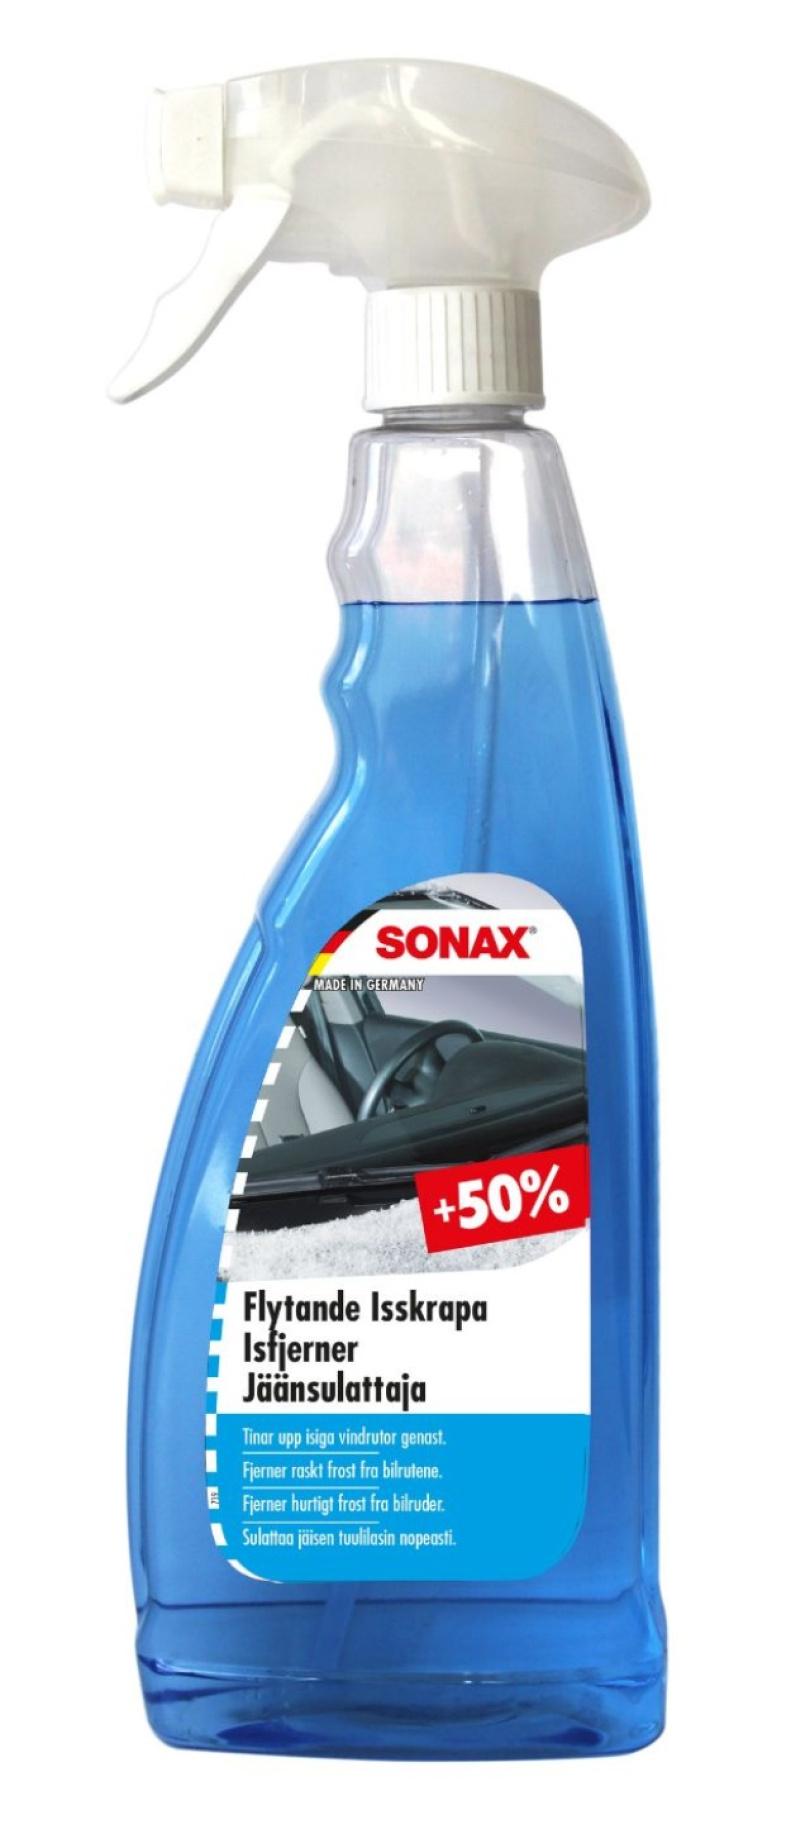 SONAX Flytande Isskrapa +50%